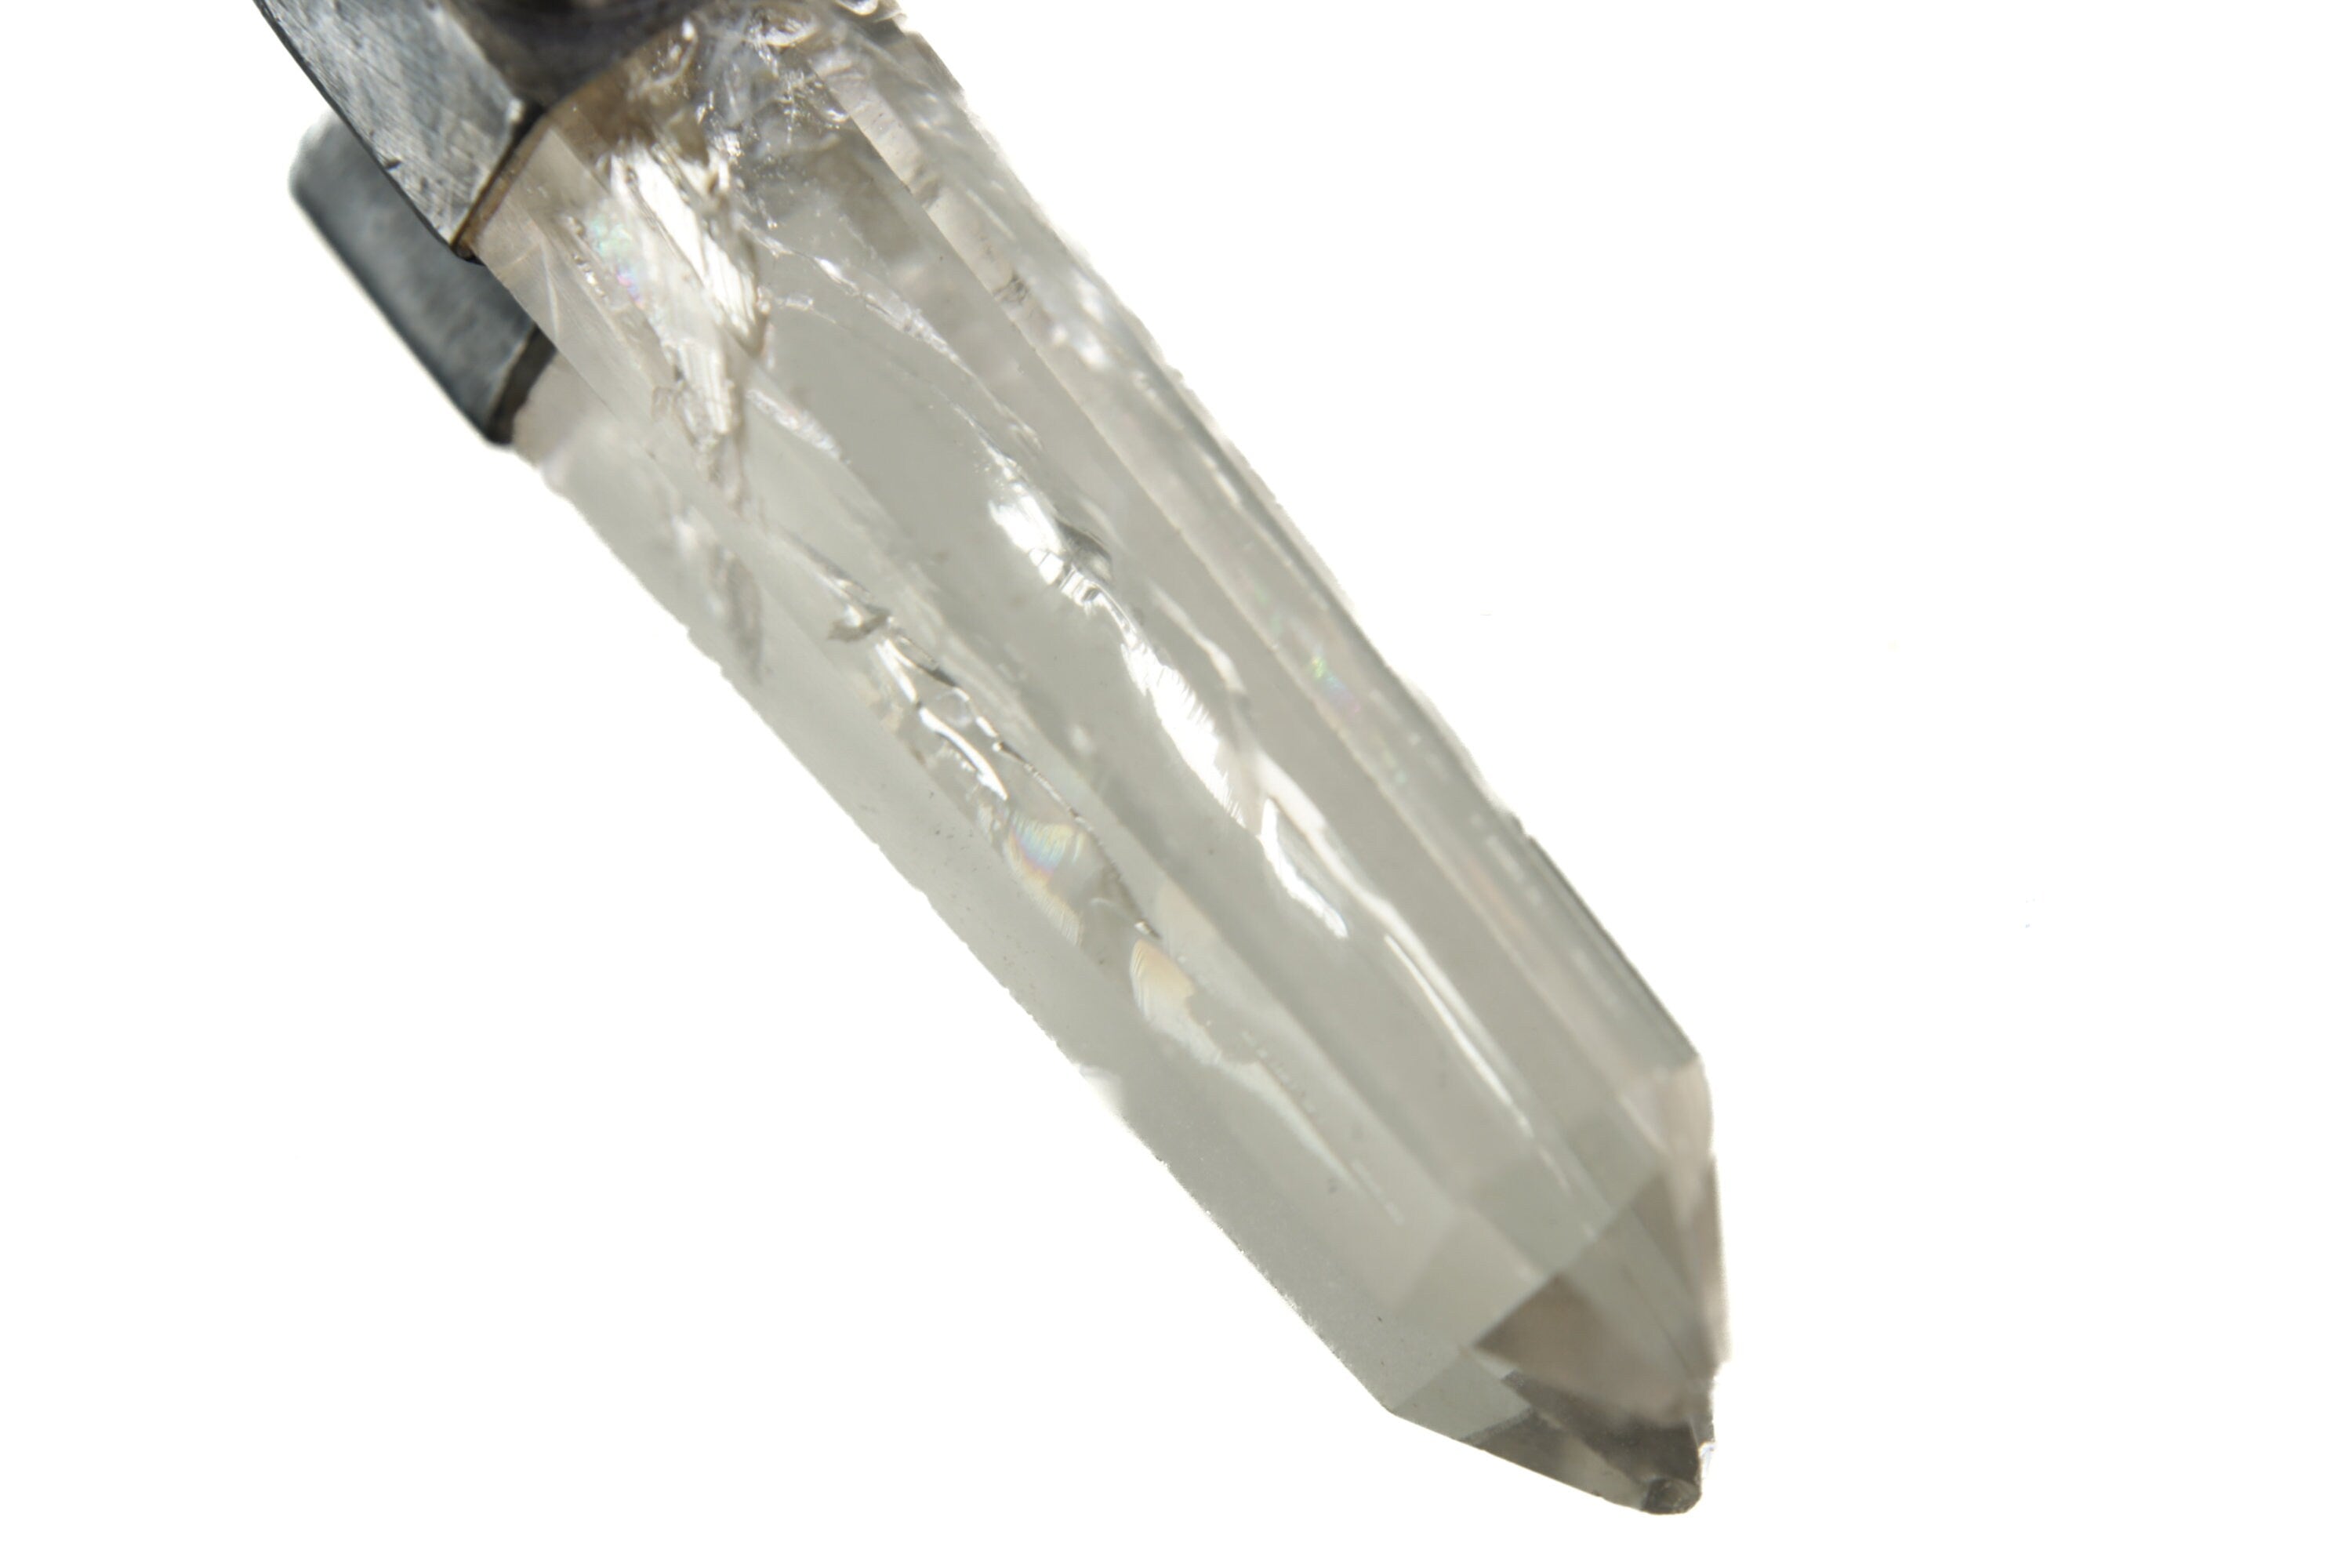 Herkimer diamond, Blue Moonstone, Cut Clear Laser Quartz Generator Point - Silver Pendant - Oxidized - Brush Texture